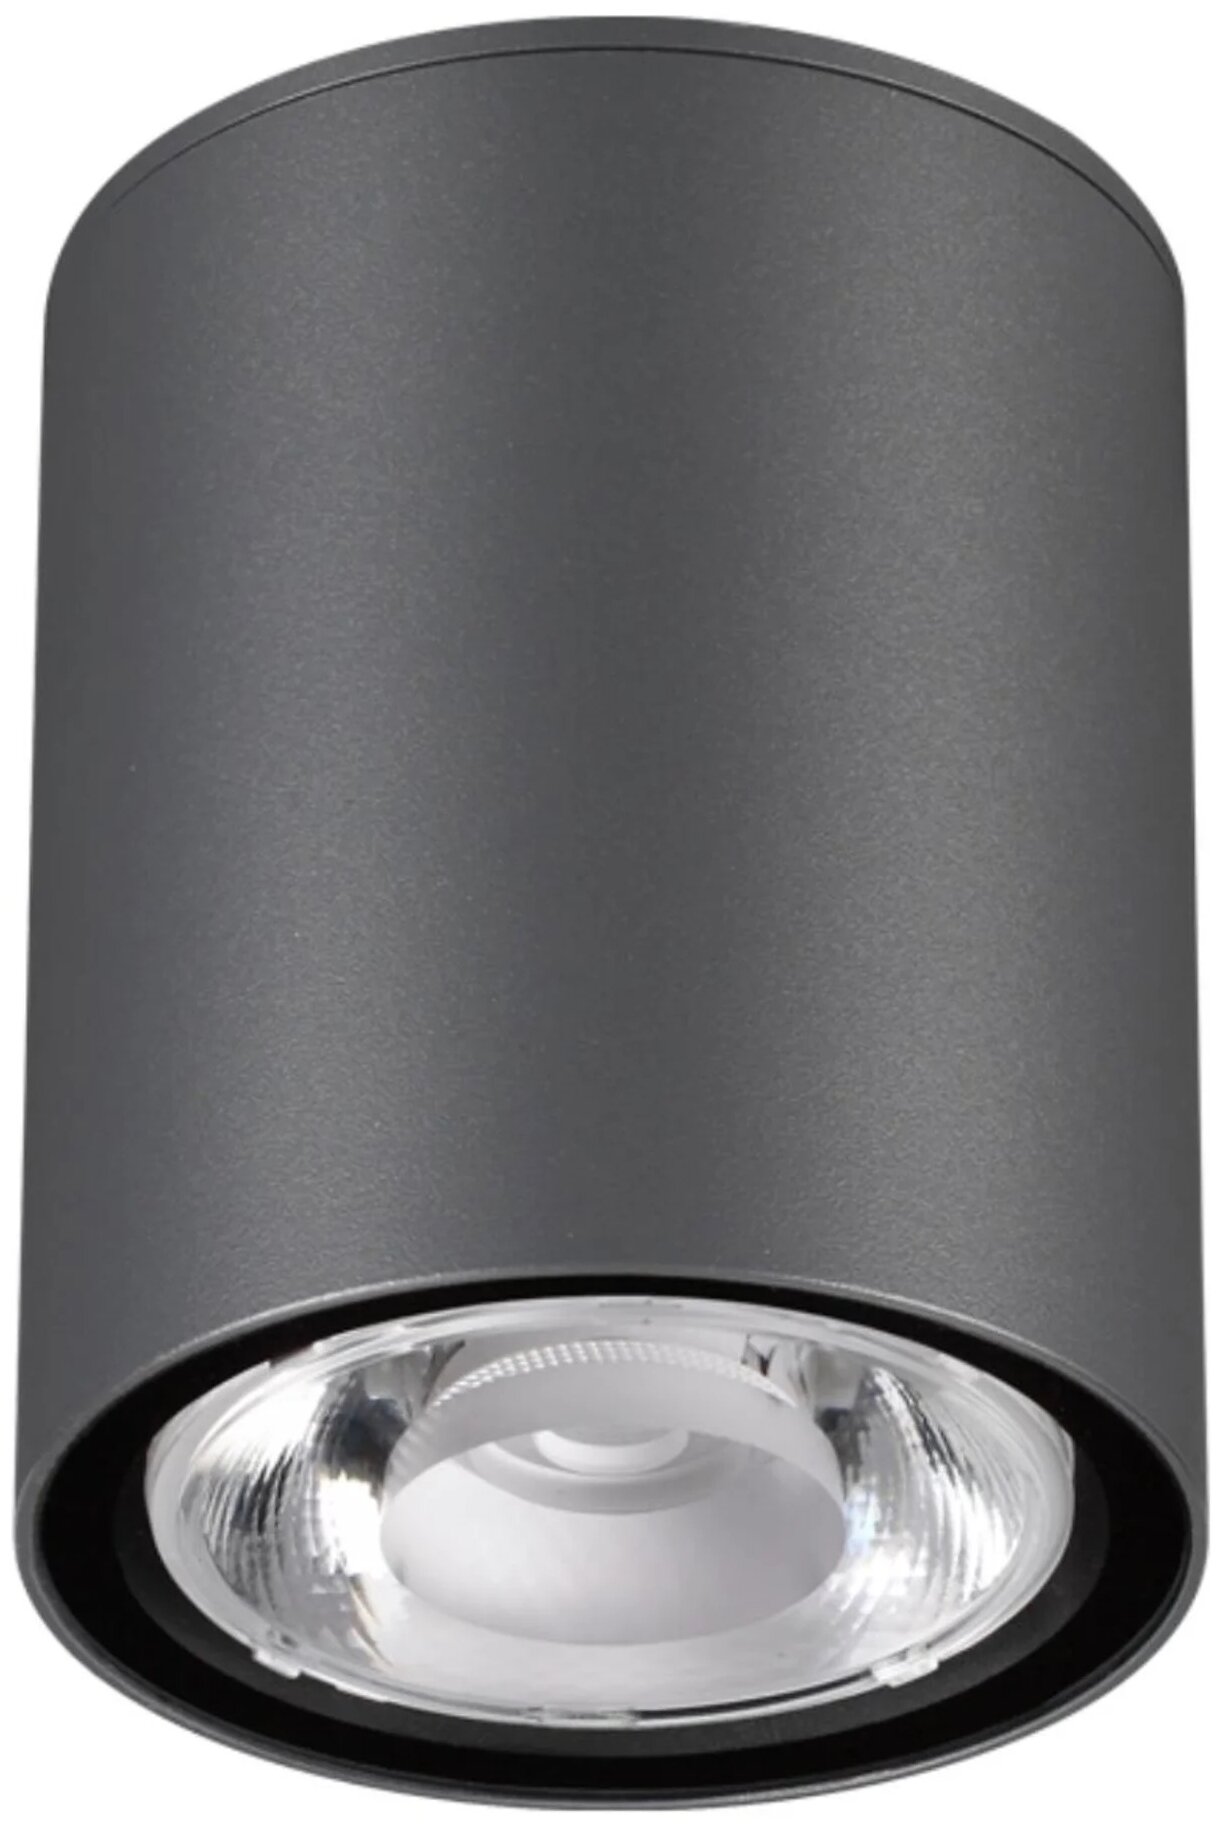 Светильник ландшафтный светодиодный NOVOTECH TUMBLER 358011 1ХLEDХ6W;серый;серый